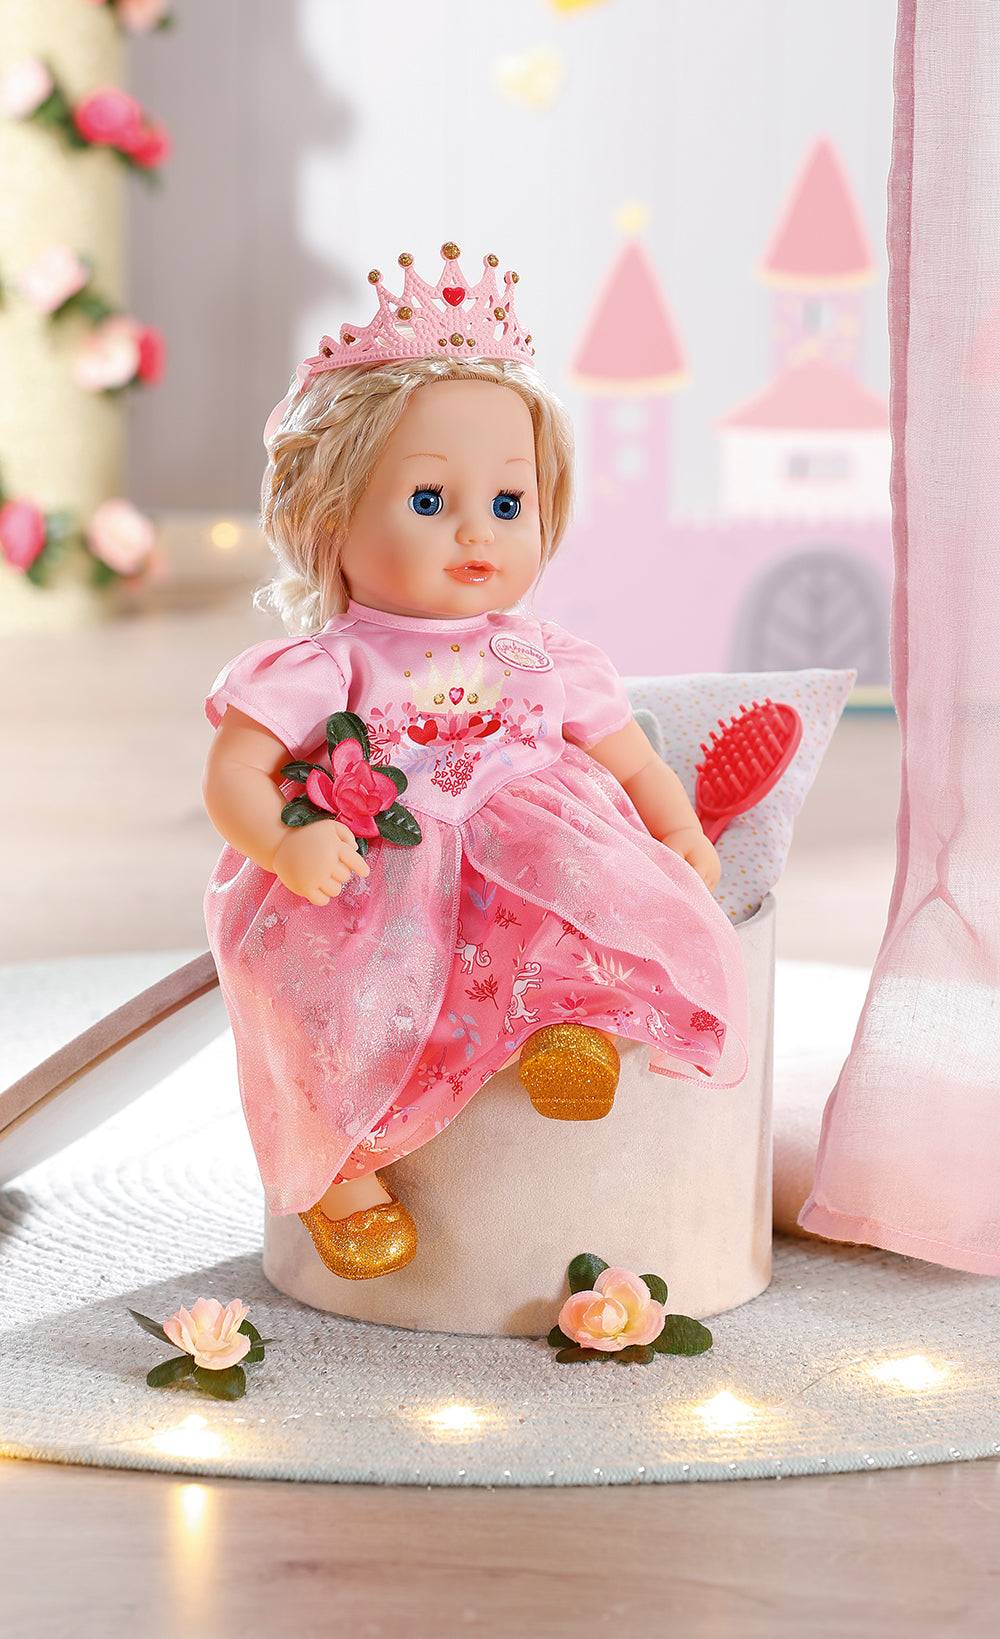 Baby Annabell Little Sweet Princess Doll 36cm